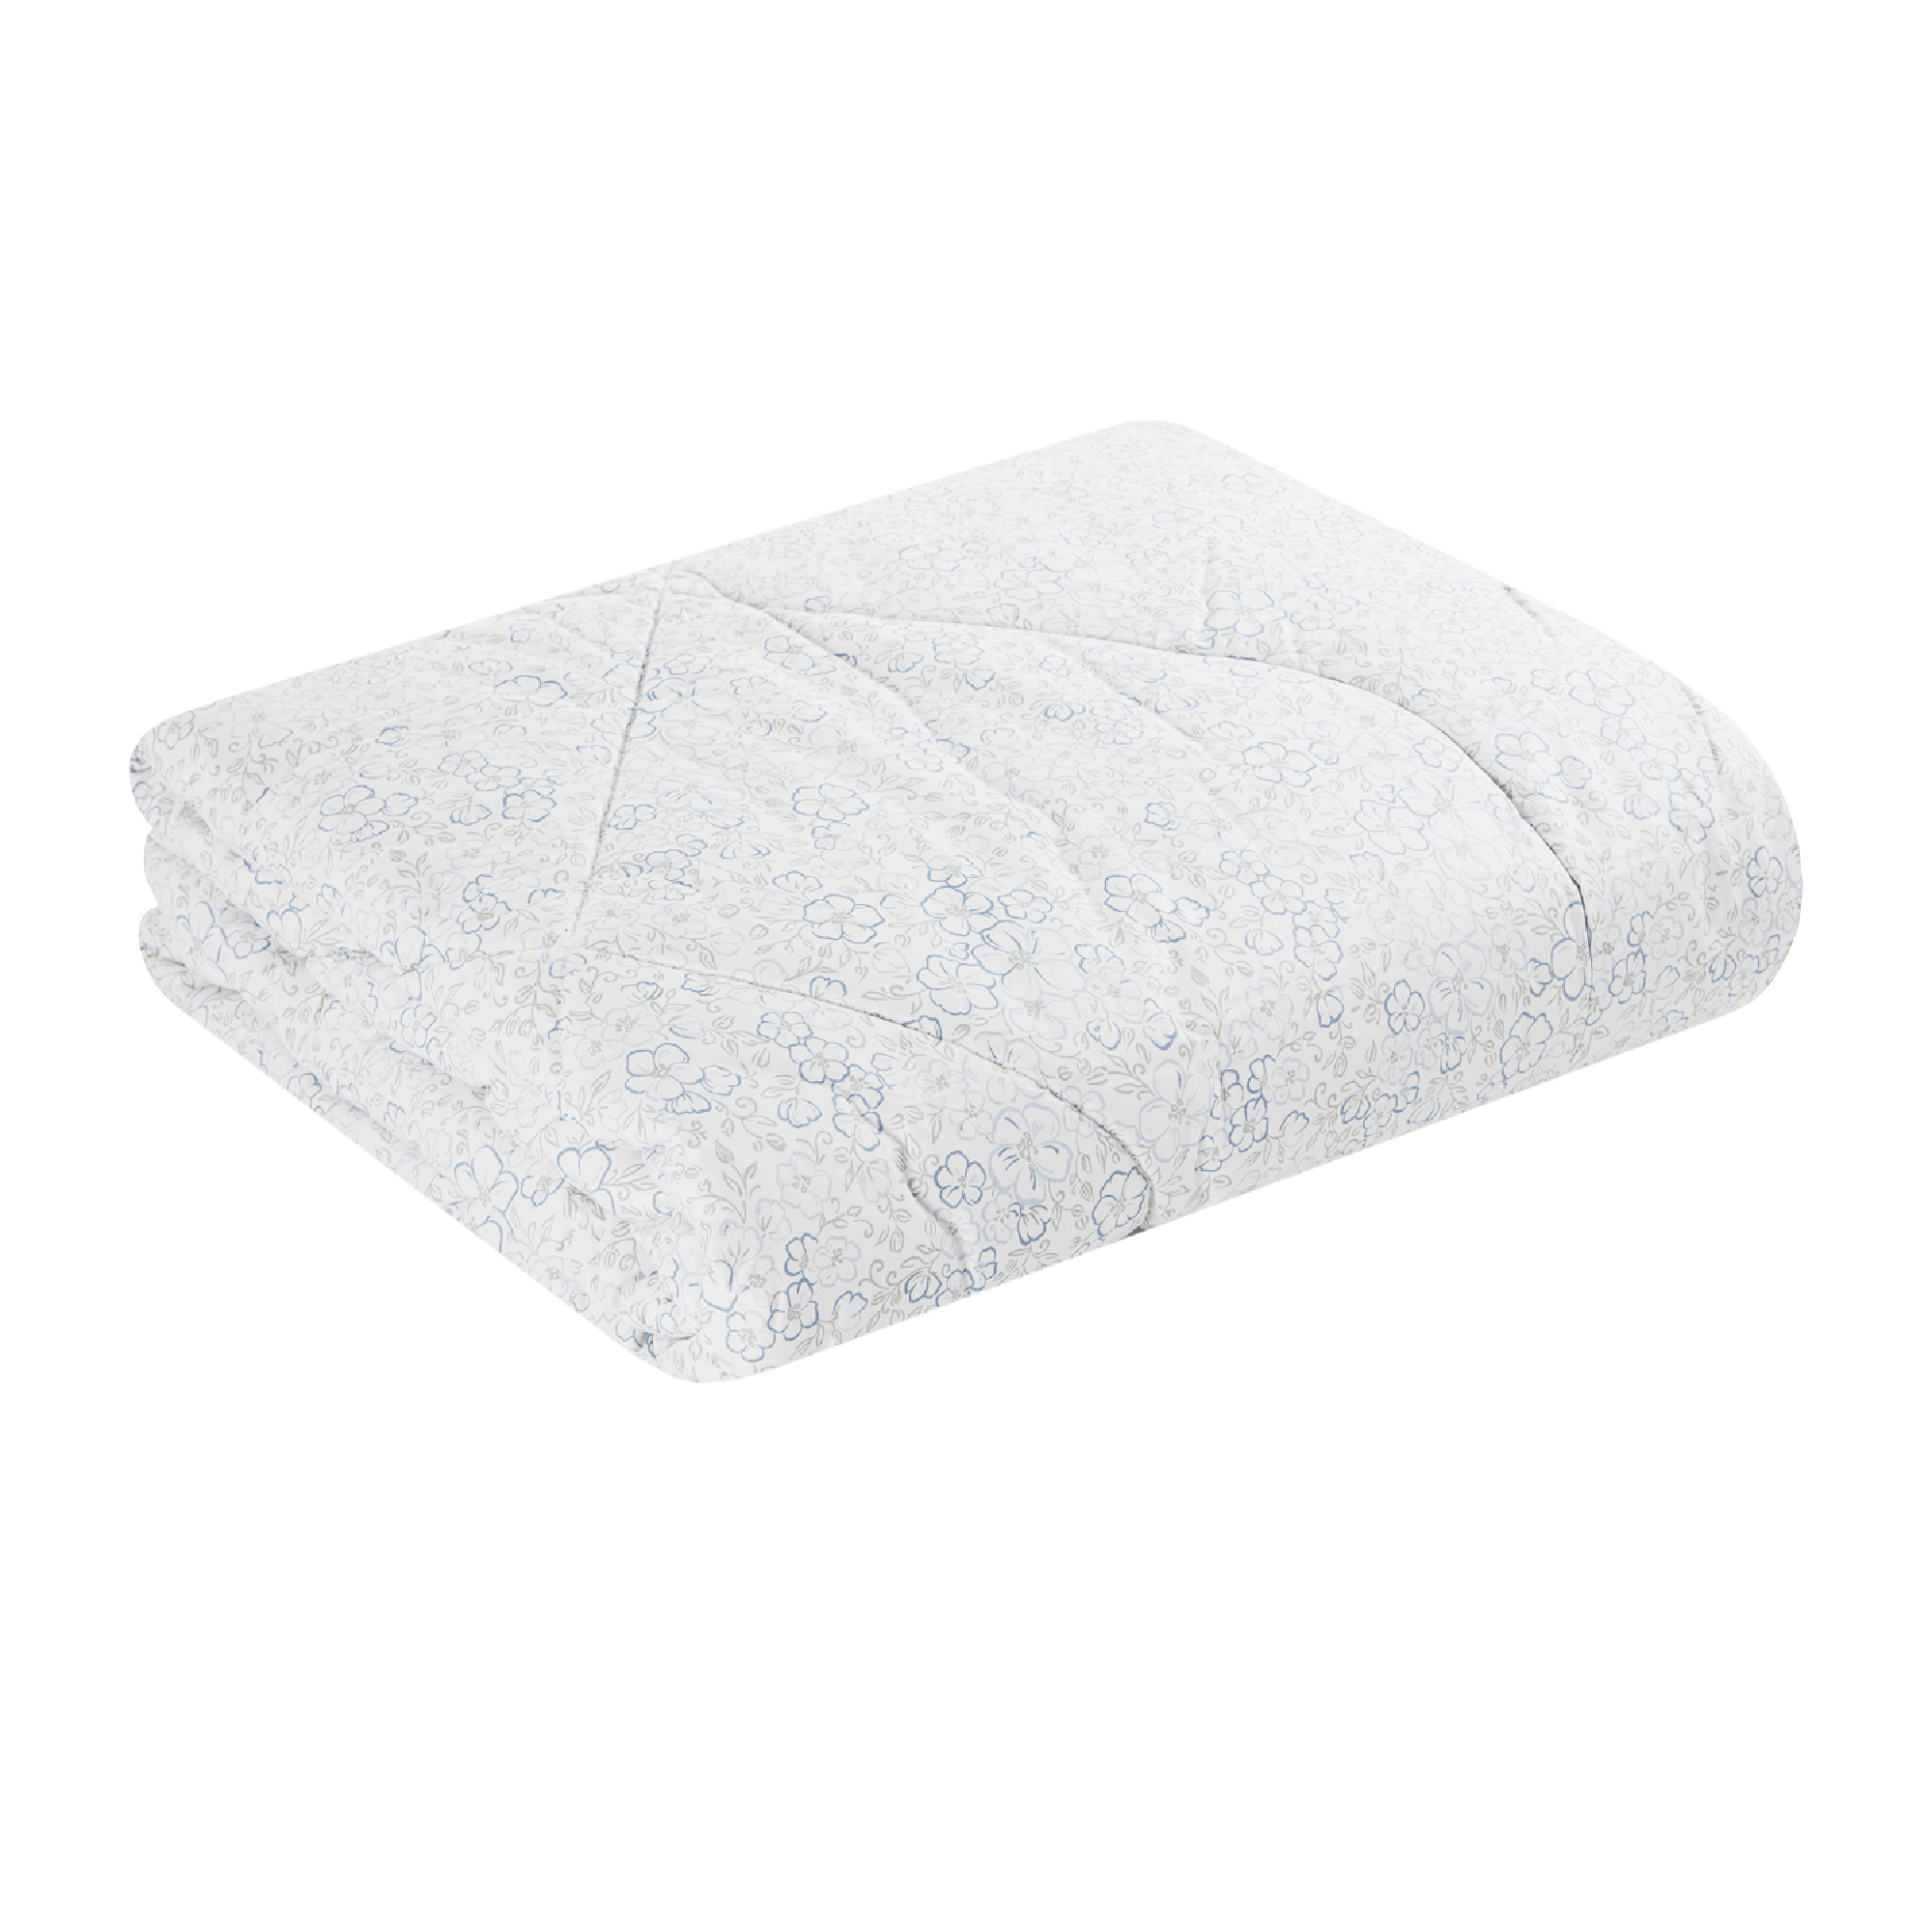 Одеяло Classic by togas альпийский лен 140х200, цвет белый, размер 140х200 см - фото 1